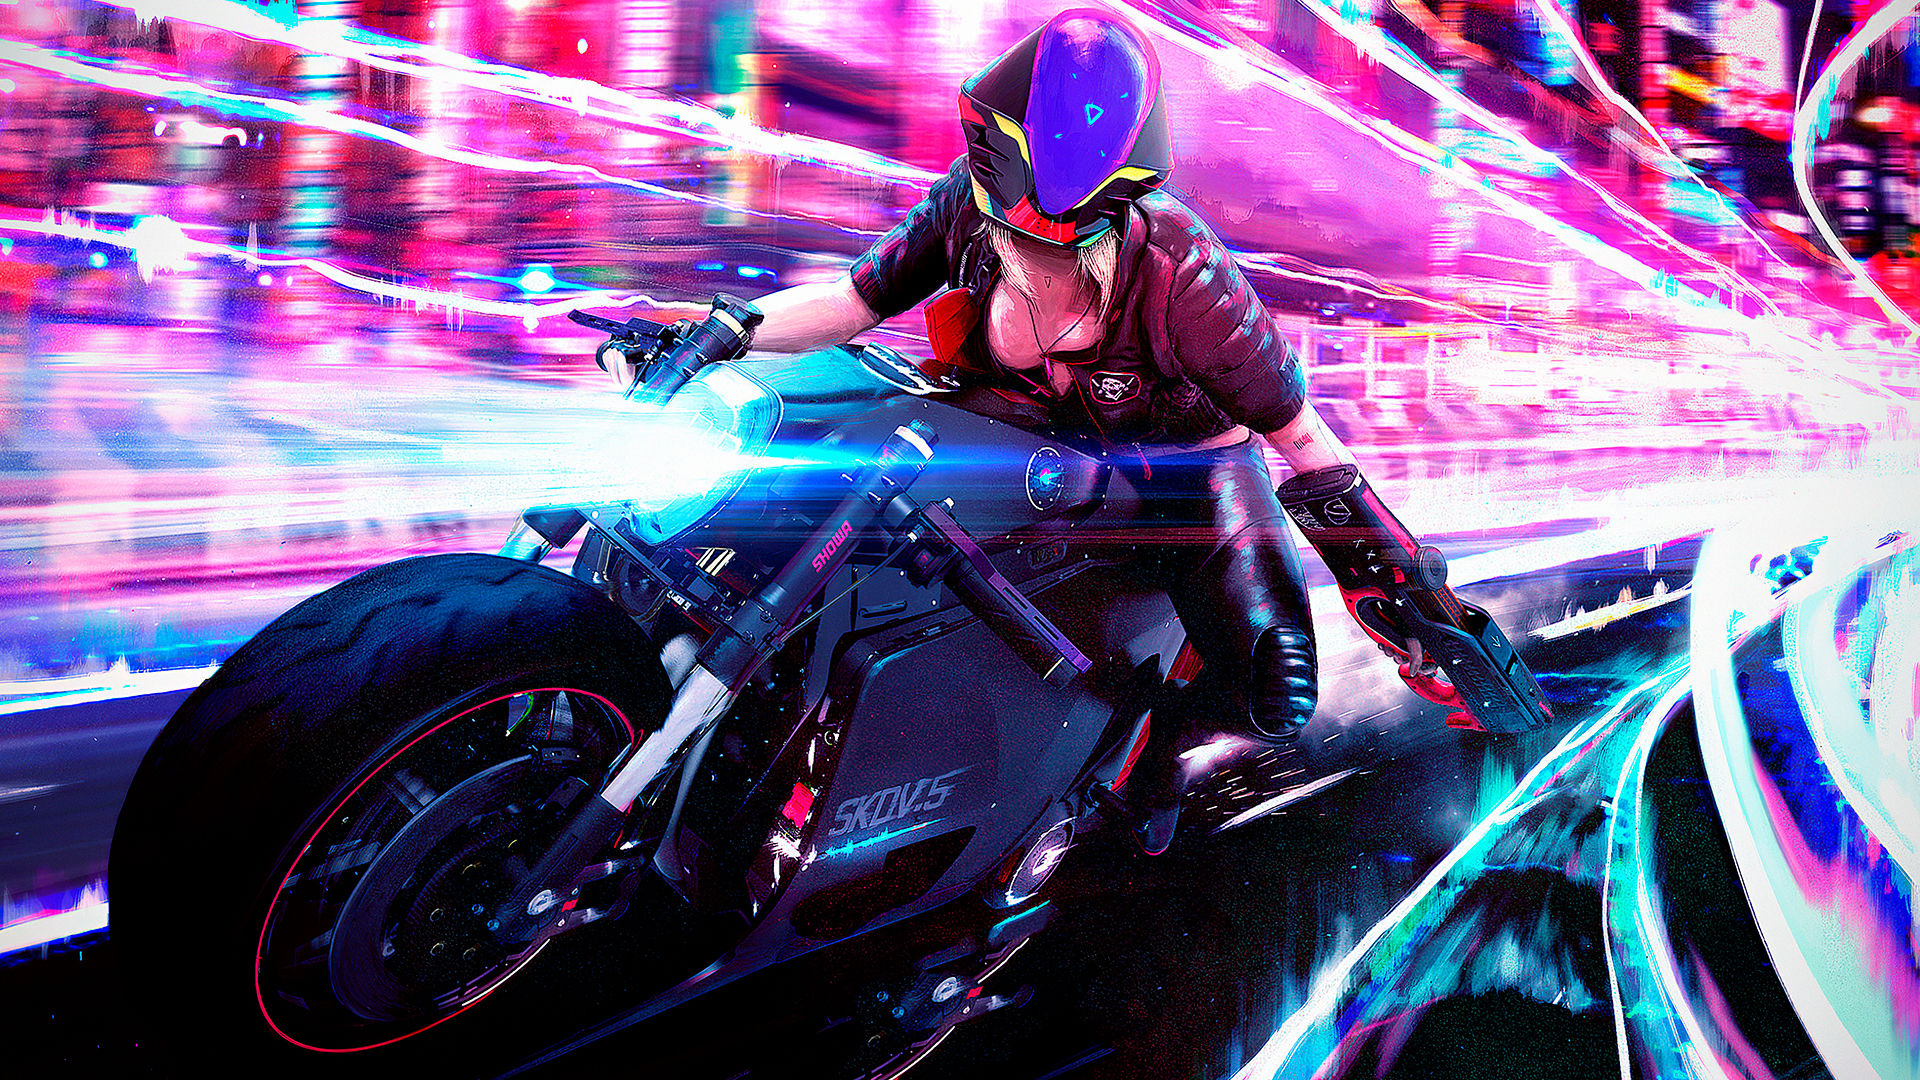 Cyberpunk Woman In Motorcycle Wallpapers